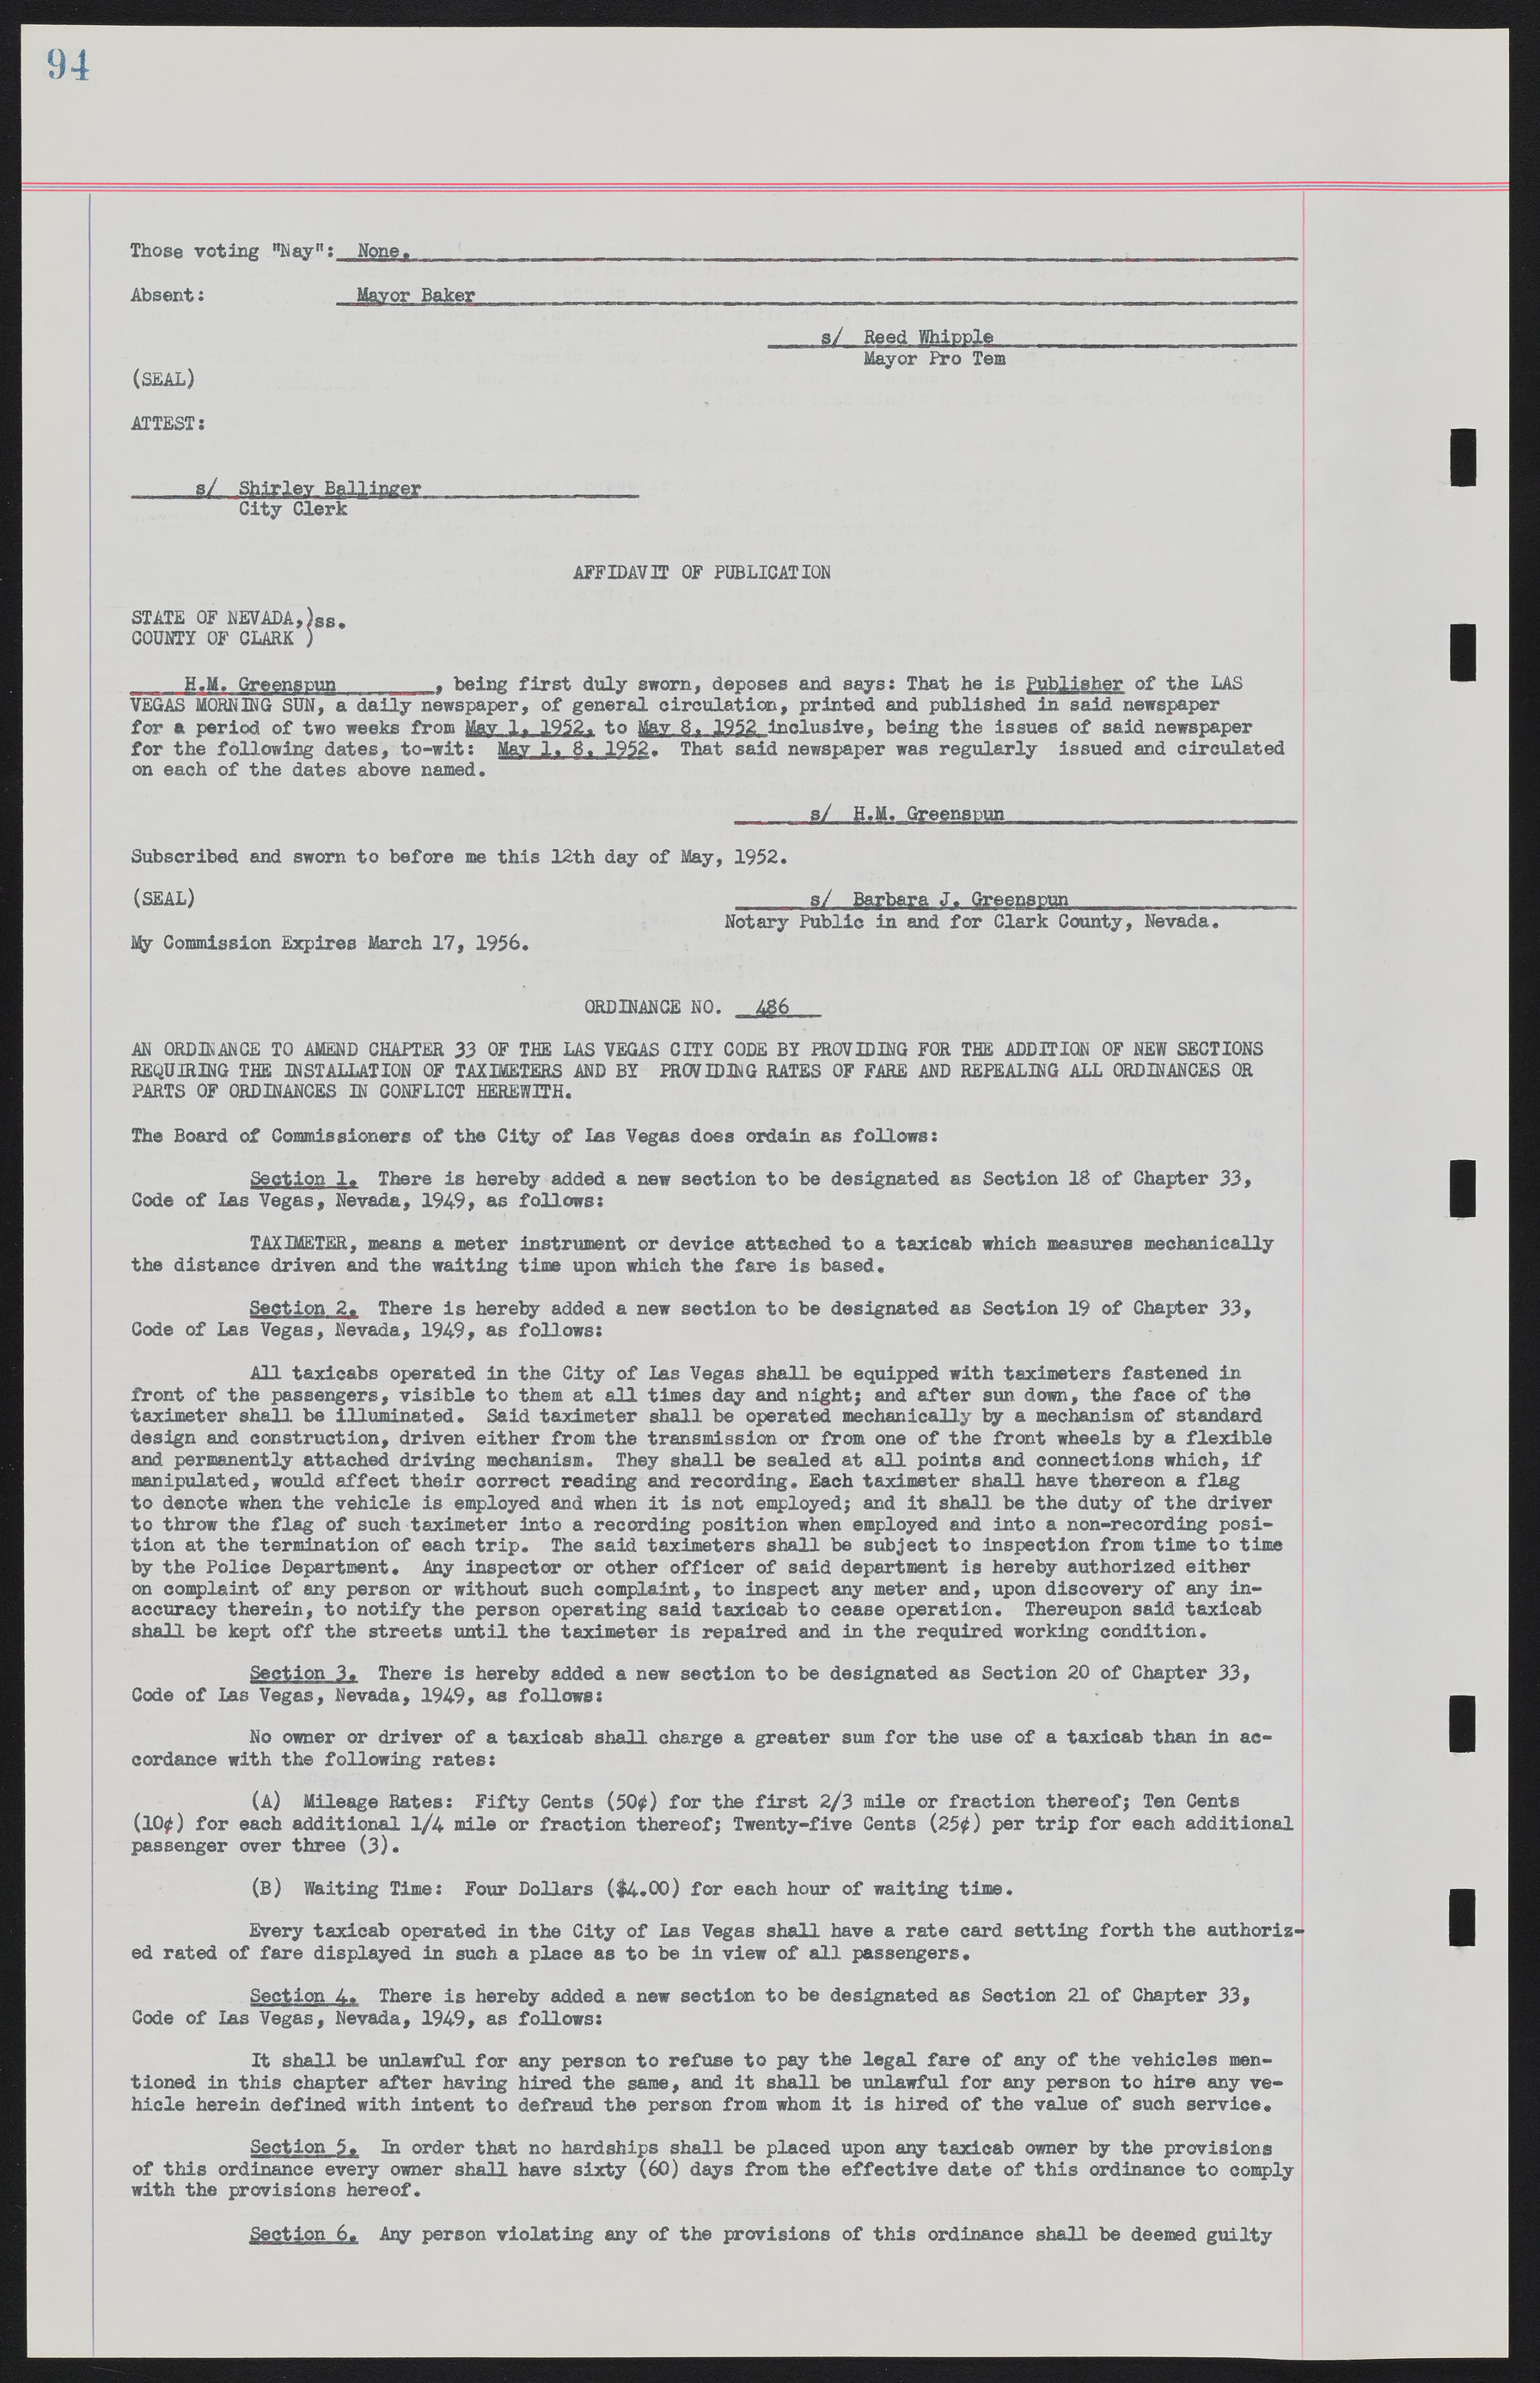 Las Vegas City Ordinances, November 13, 1950 to August 6, 1958, lvc000015-102